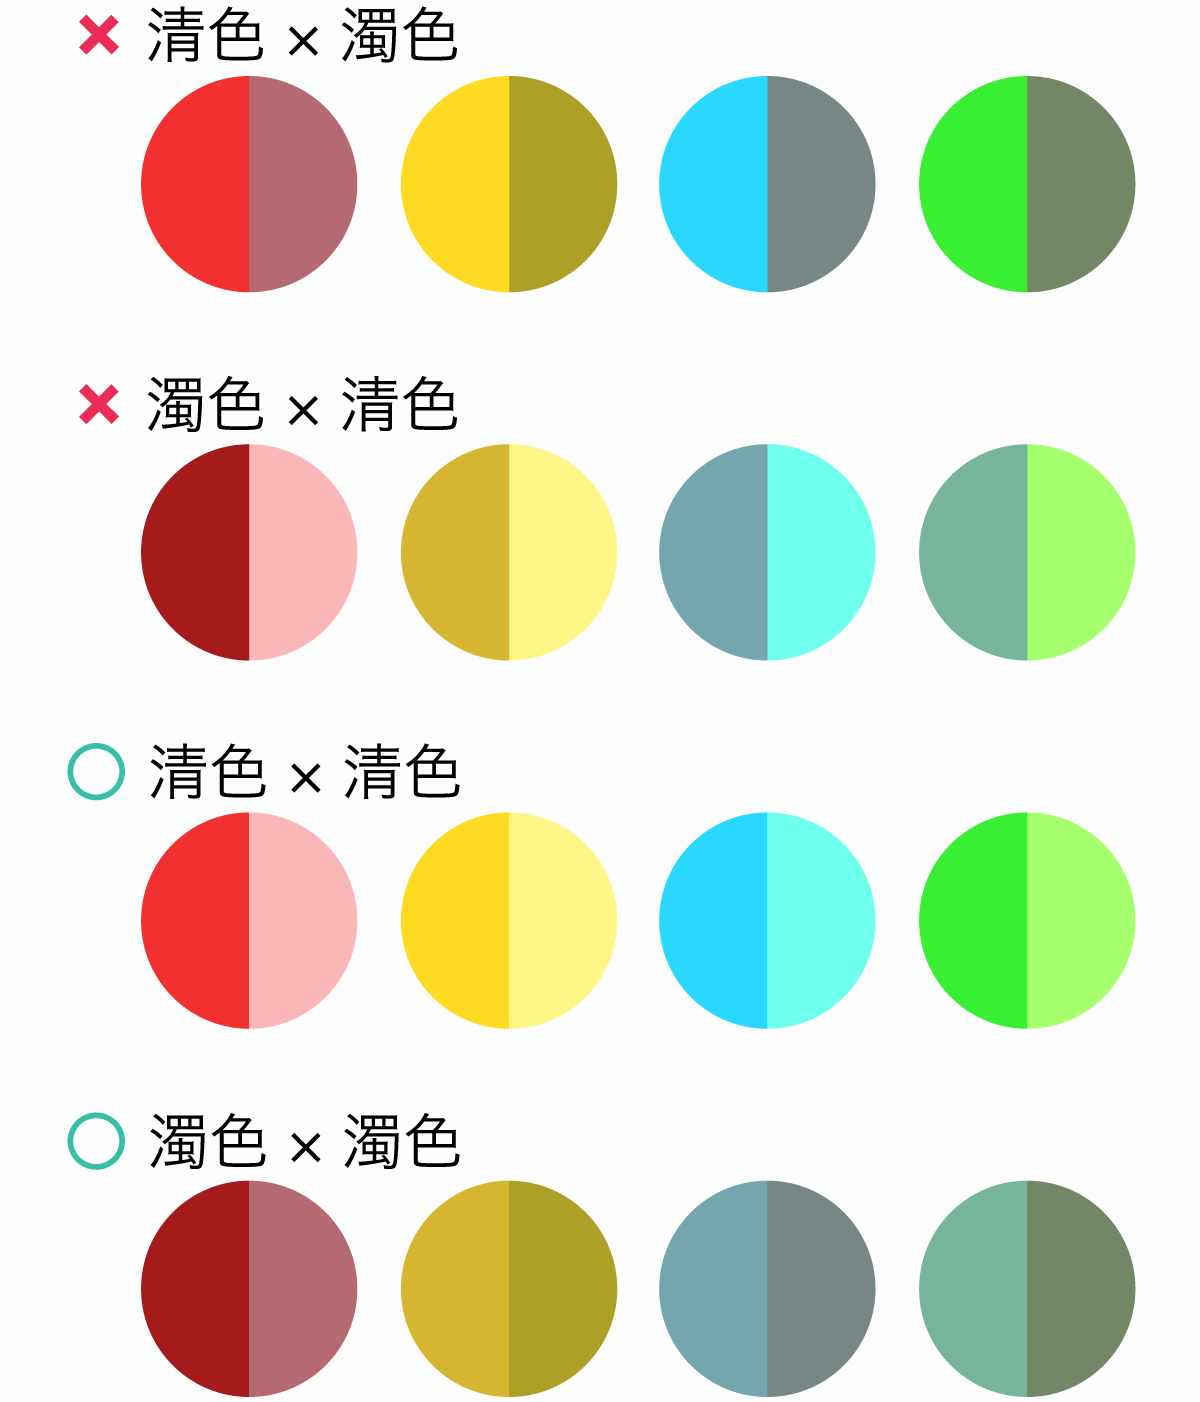 彩度対比と清色×濁色